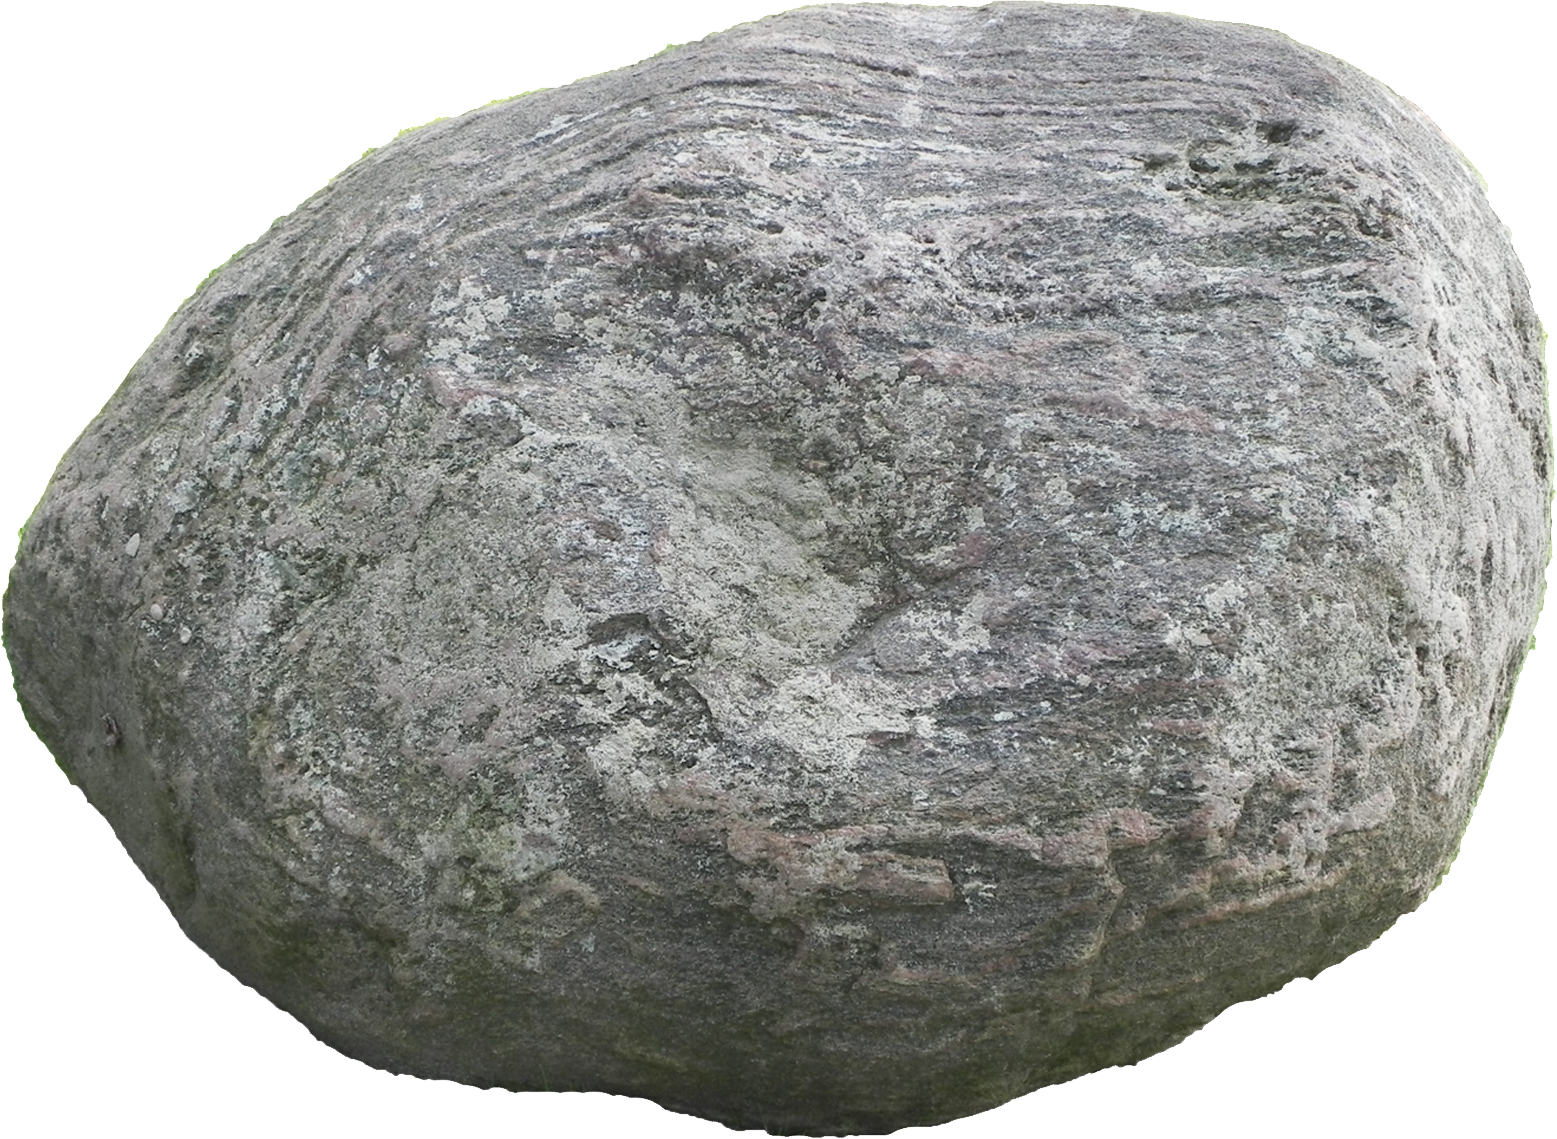 rock clipart stone